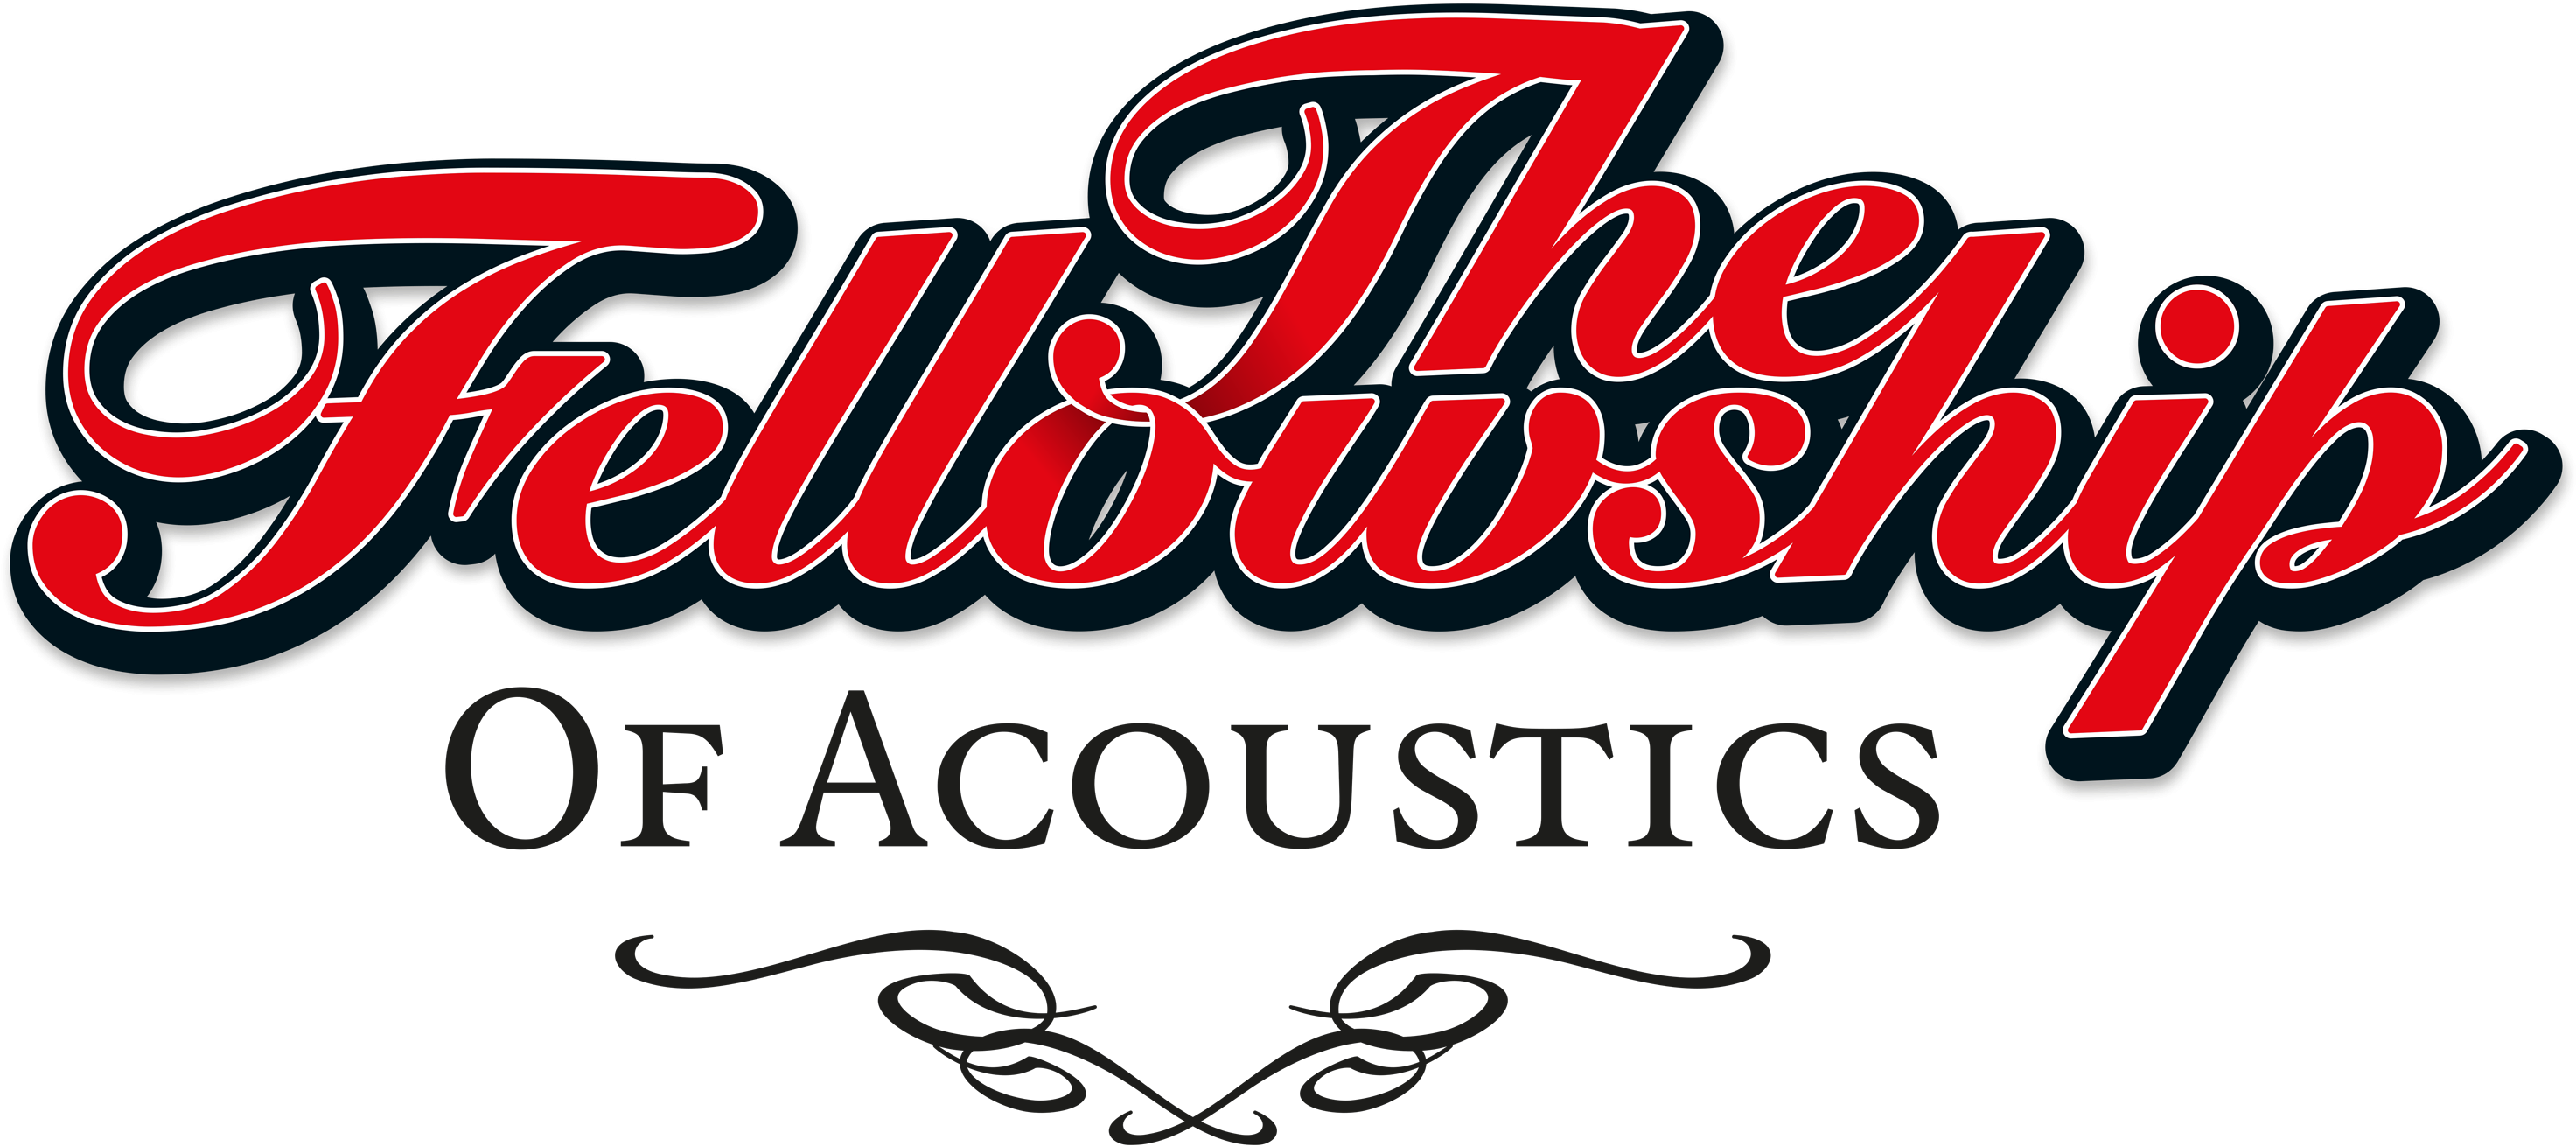 The Fellowship Of Acoustics - The Fellowship Of Acoustics (3000x1360)